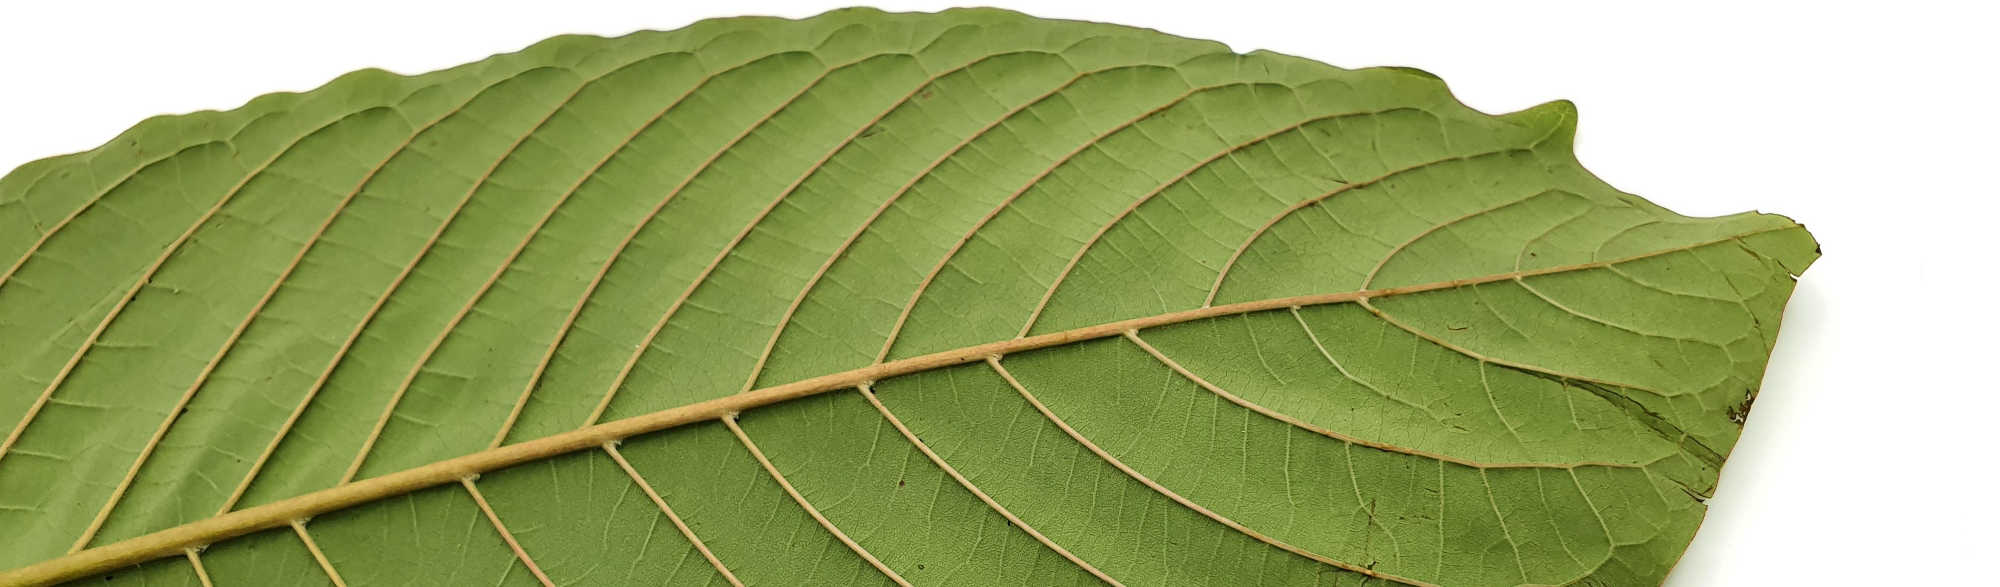 image of mucho kratom leaf